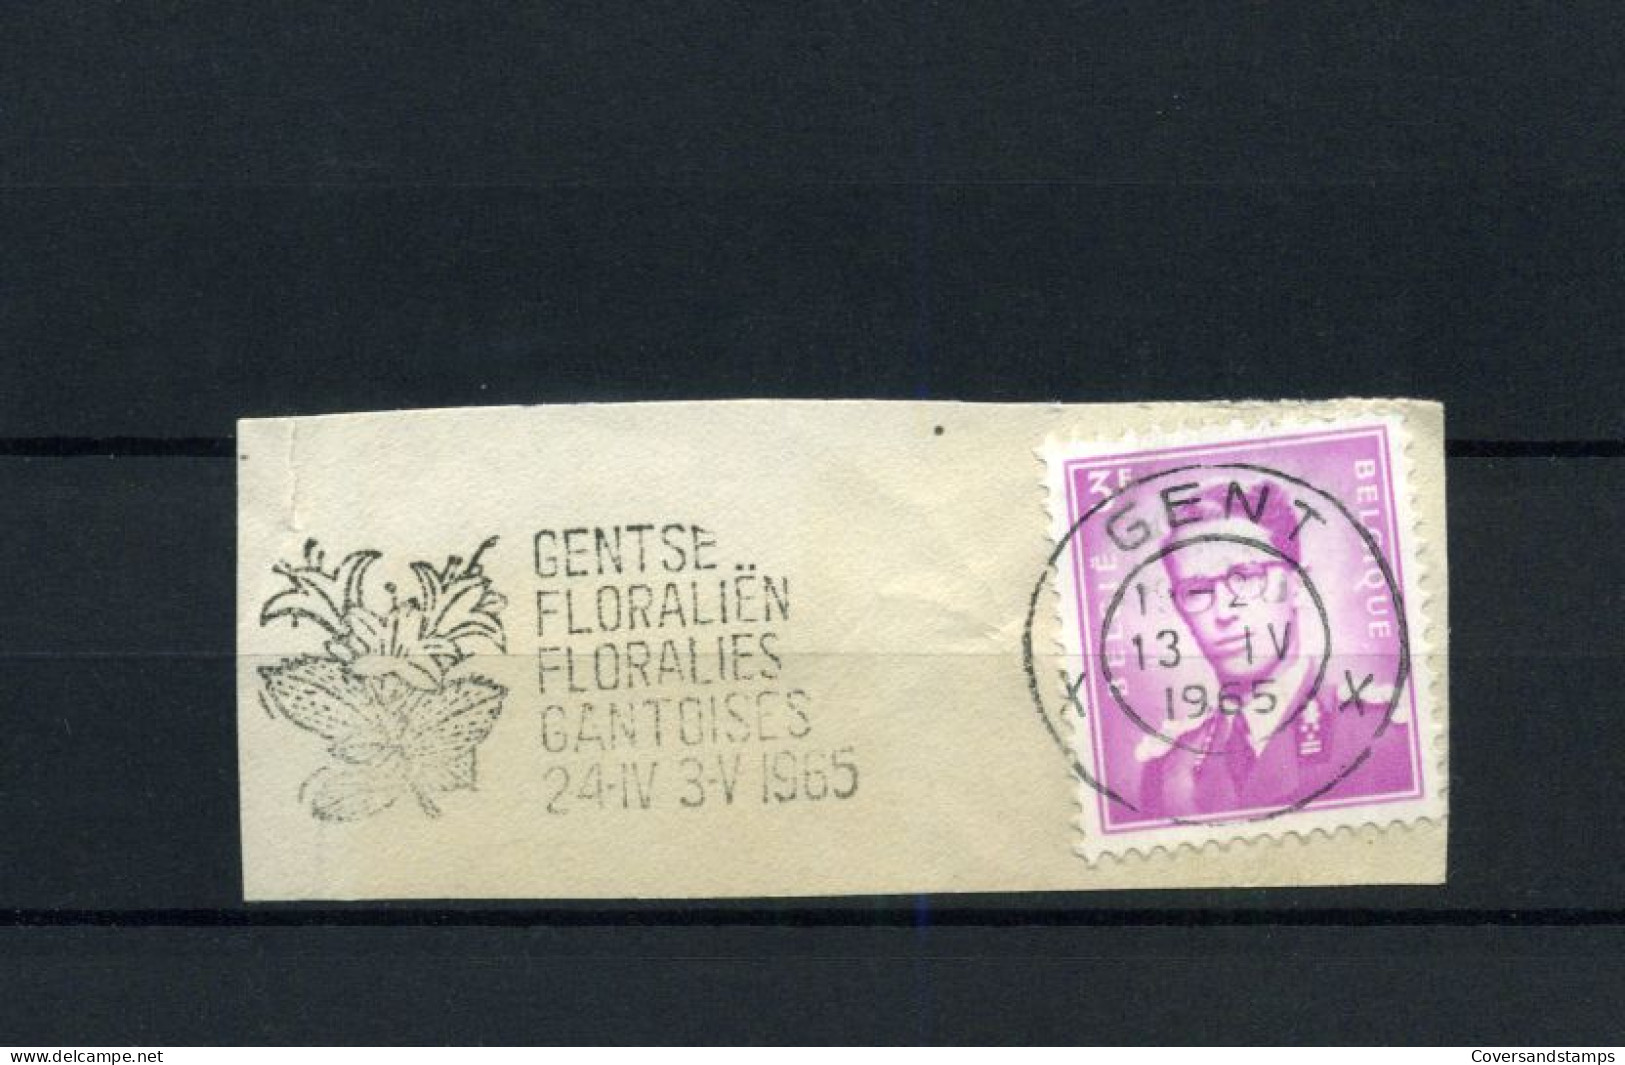 Vlagstempel  / Flamme : "Gentse Floraliën - Floralies Gantoises 24-IV 3-V 1965" - Fragment - Werbestempel